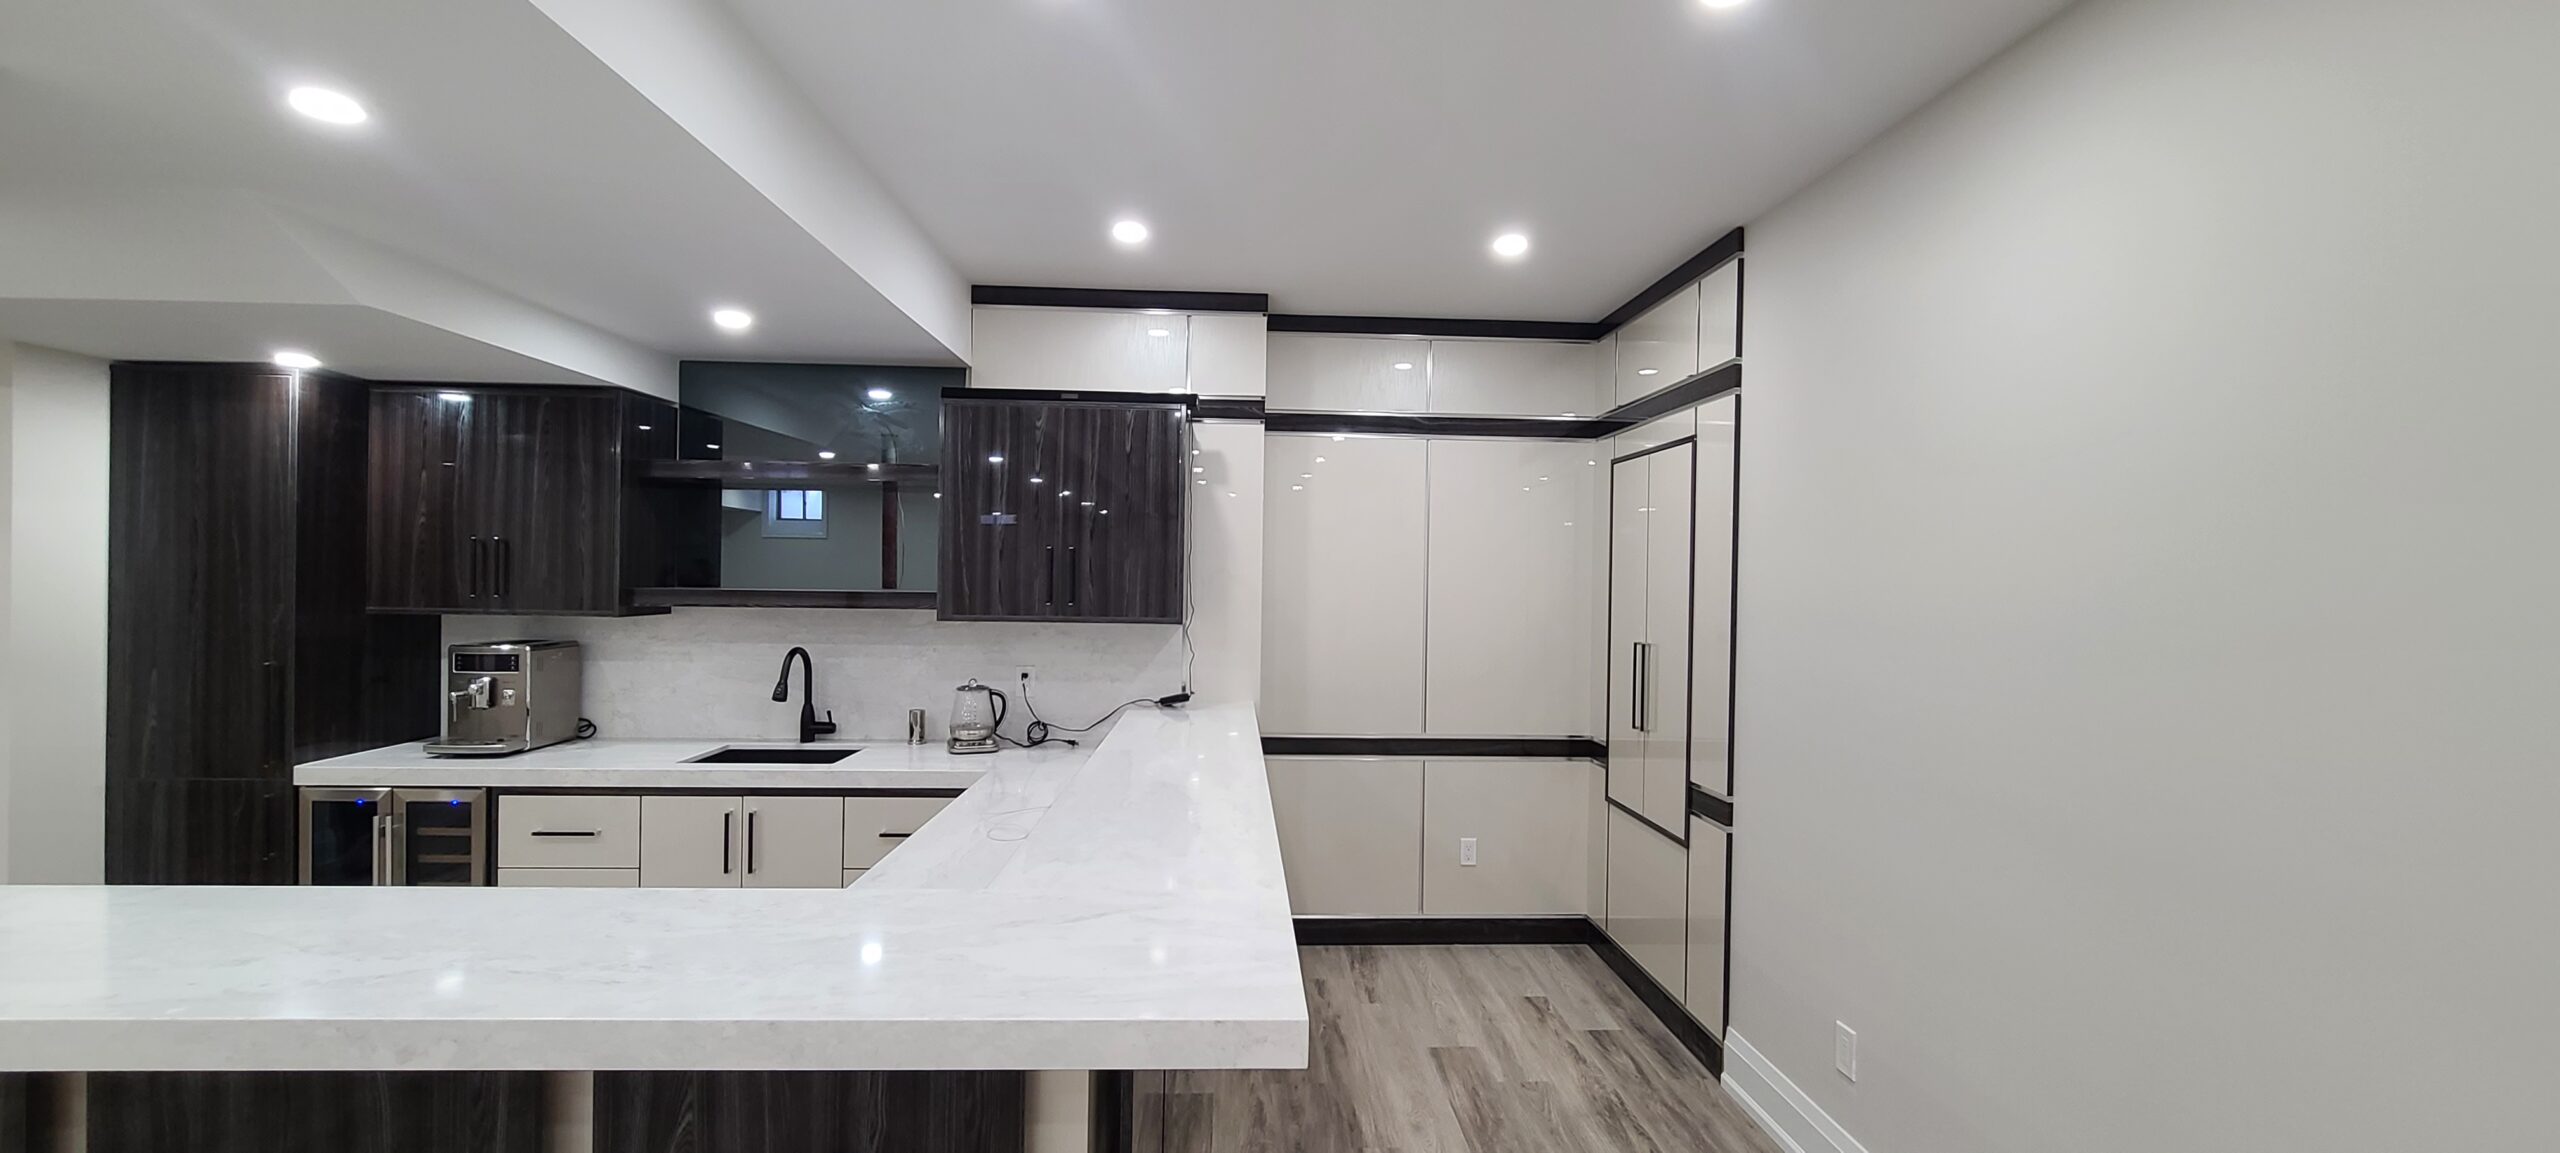 Basement Bar/Kitchen With LED lighting